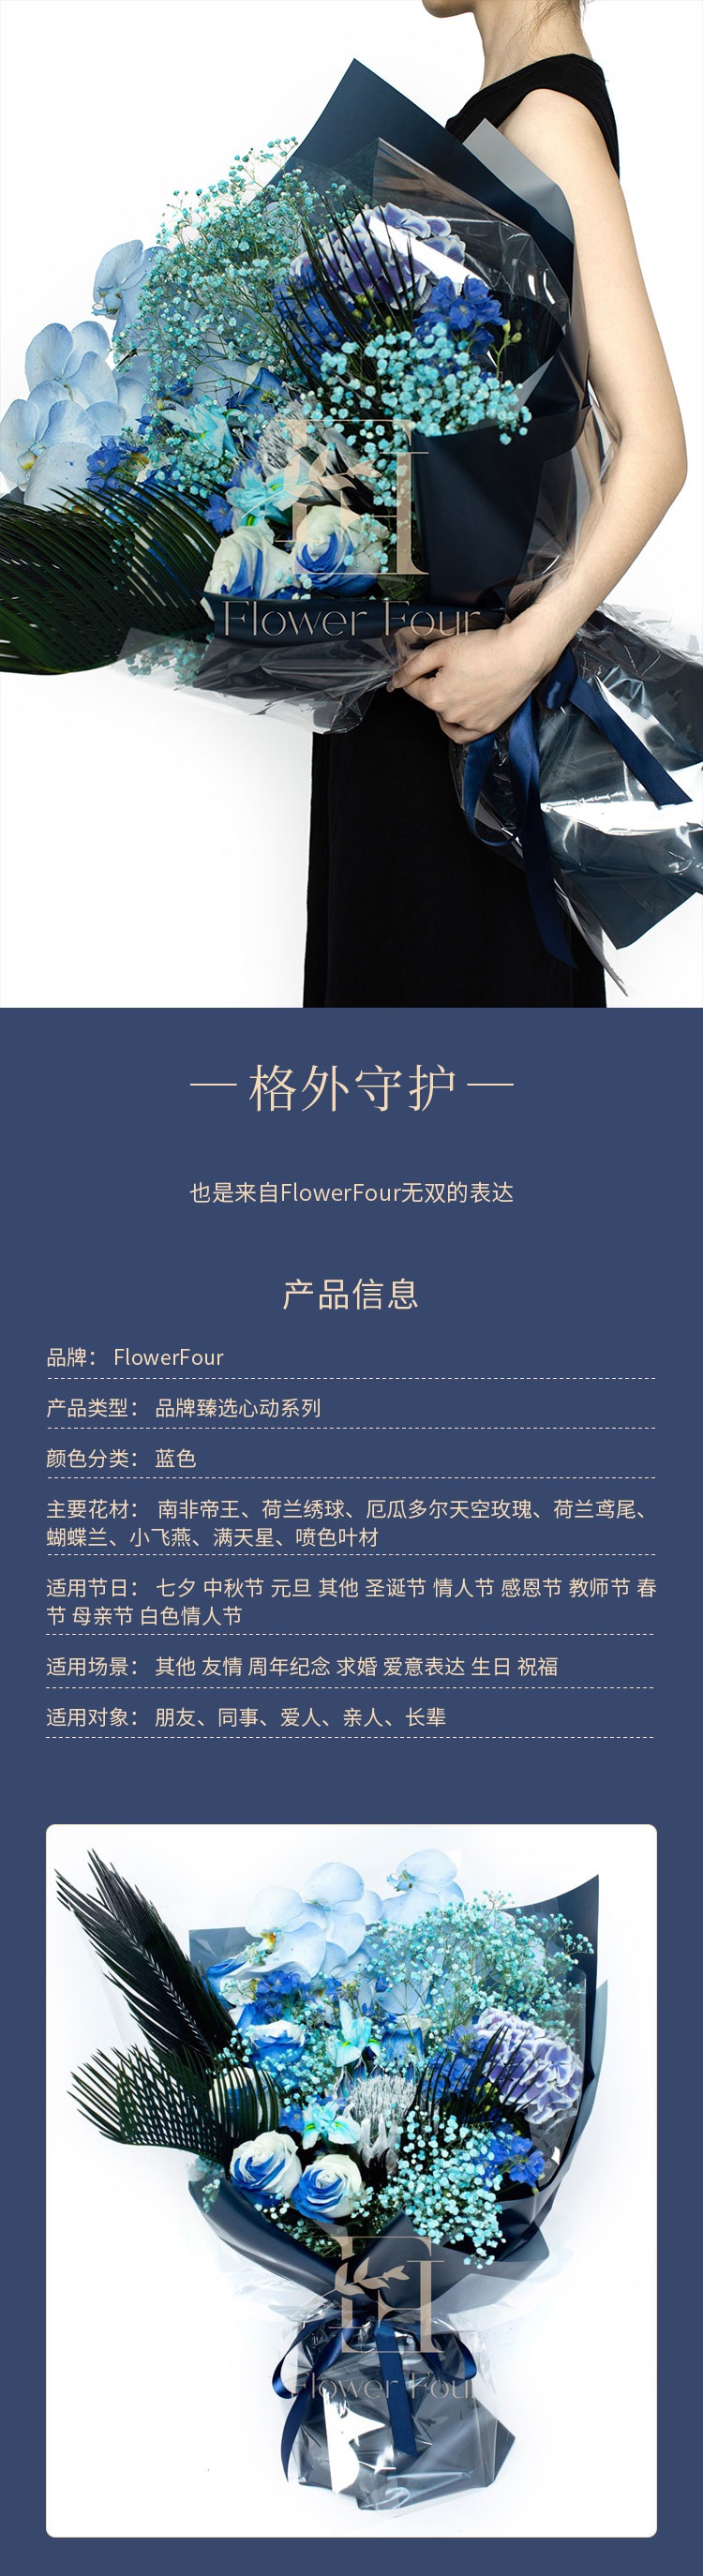 FlowerFour/FlowerFour 进口花材鲜花花束 格外守护 生日纪念日节日花束【北京地区专享】